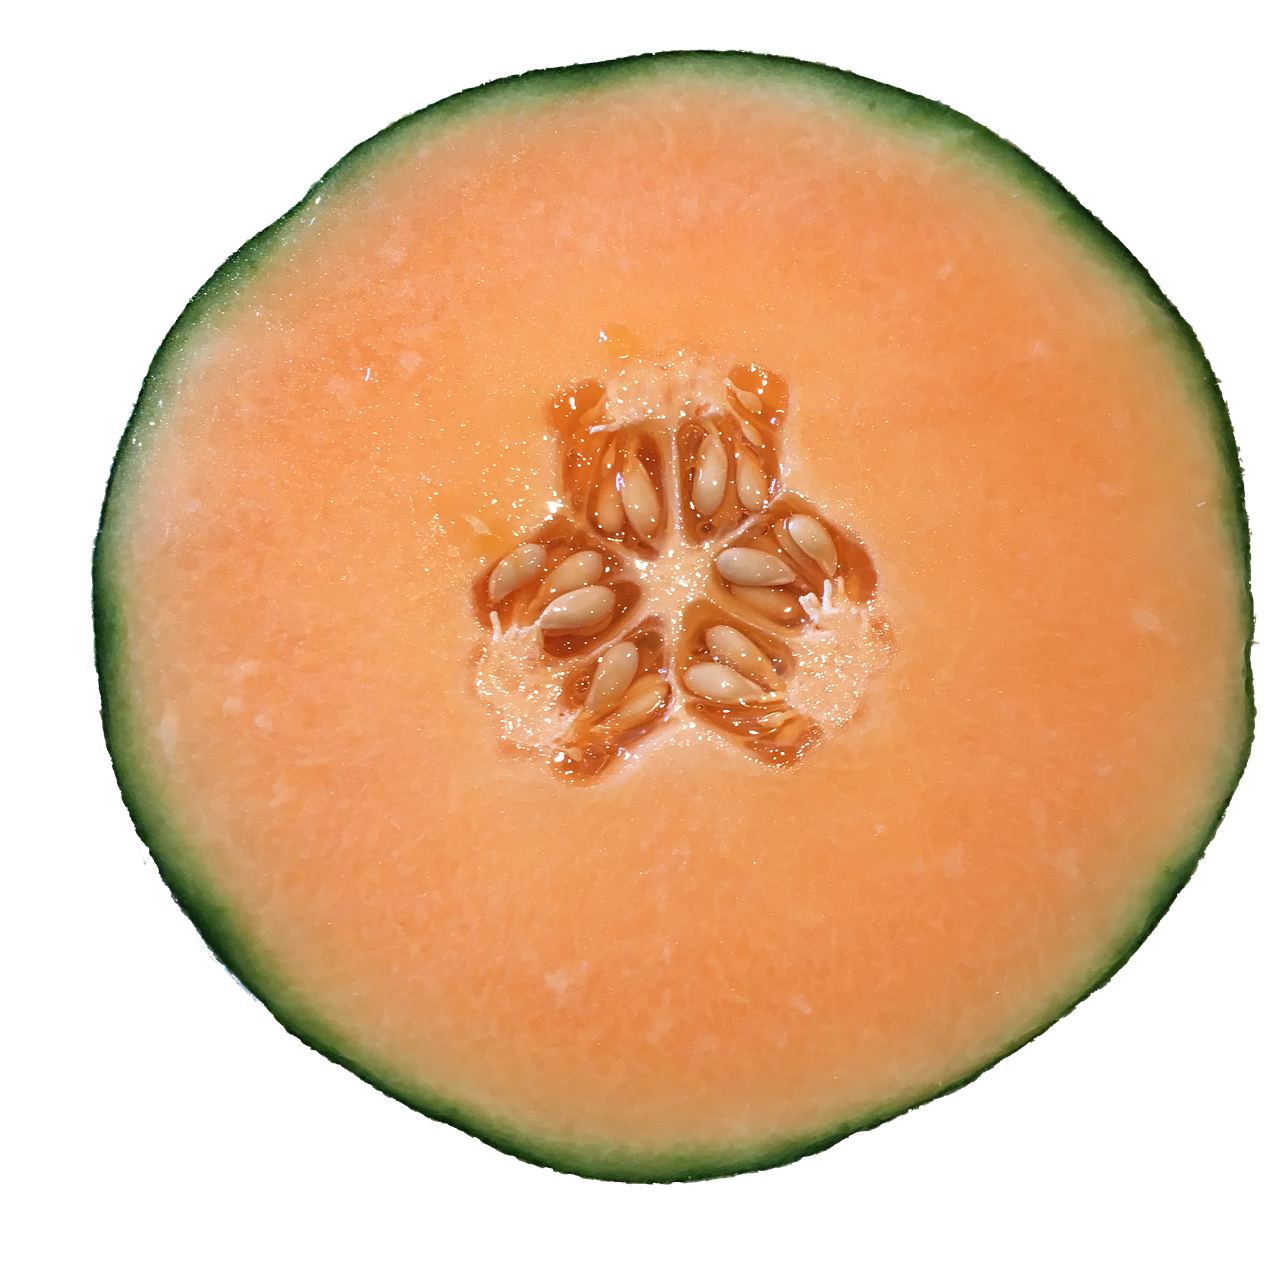 melon cantaloupe orange free photo